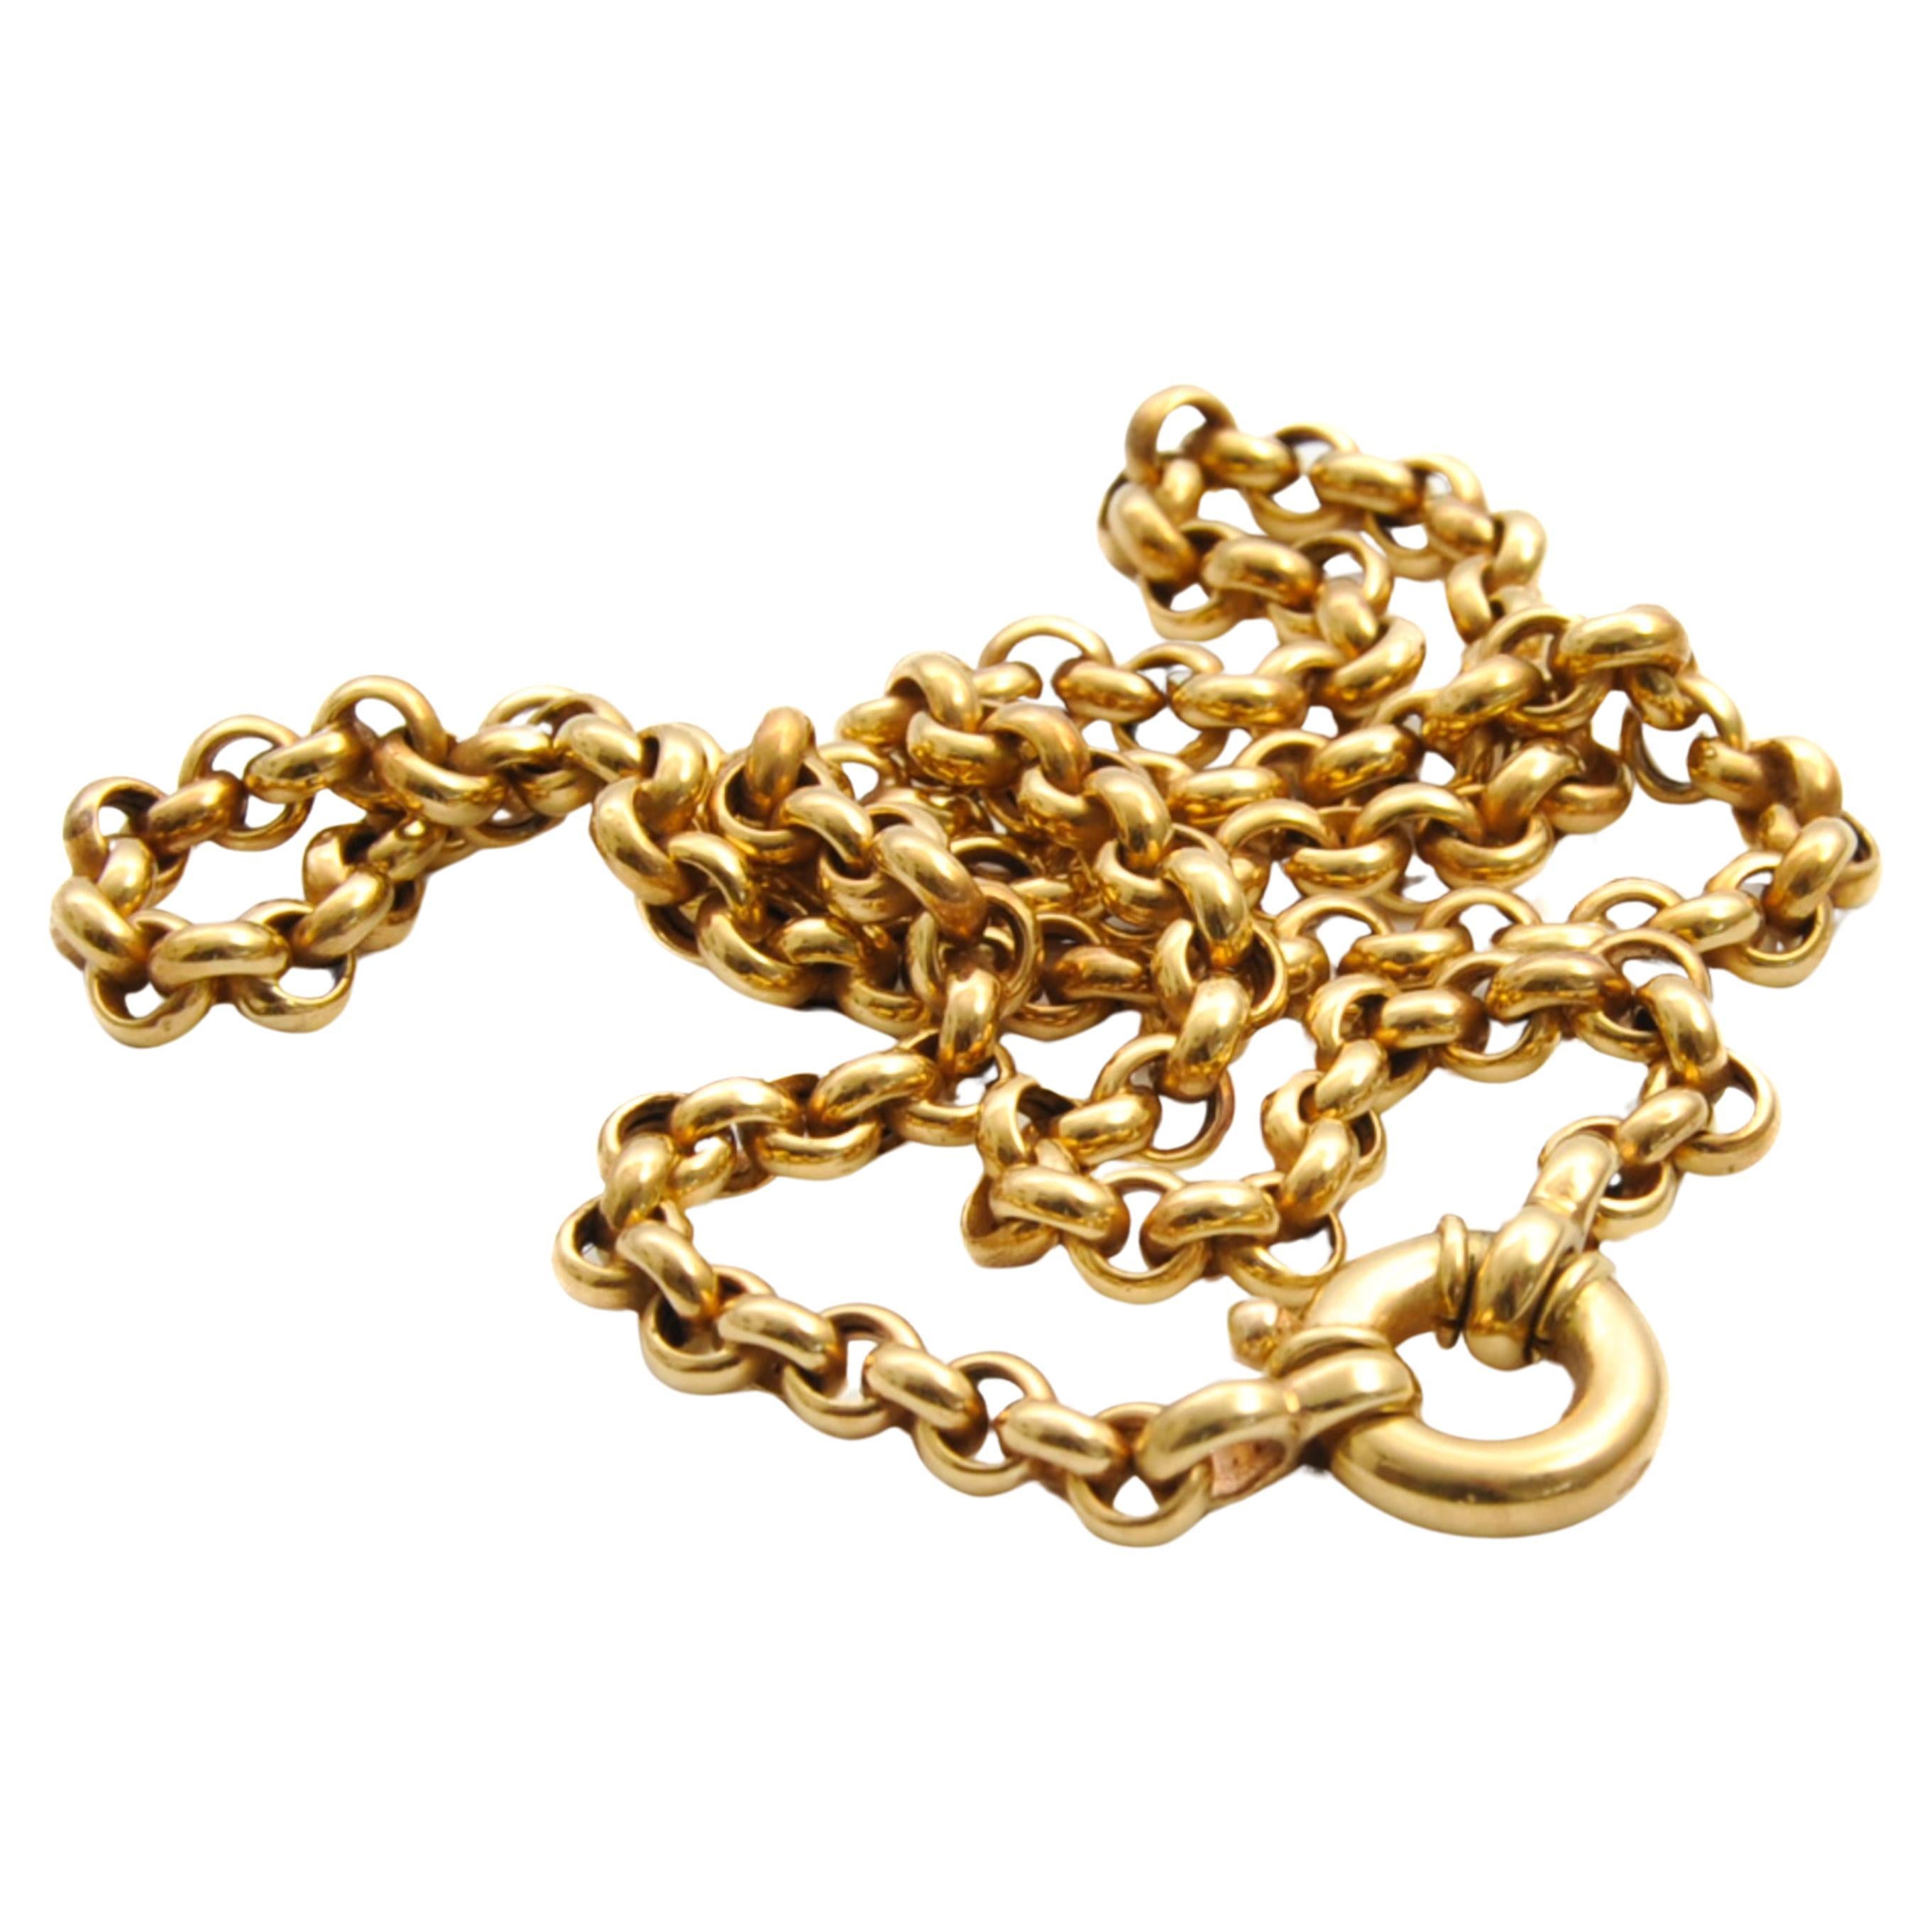 Vintage Sailor Spring Clasp 14K Gold Rolo Chain Necklace